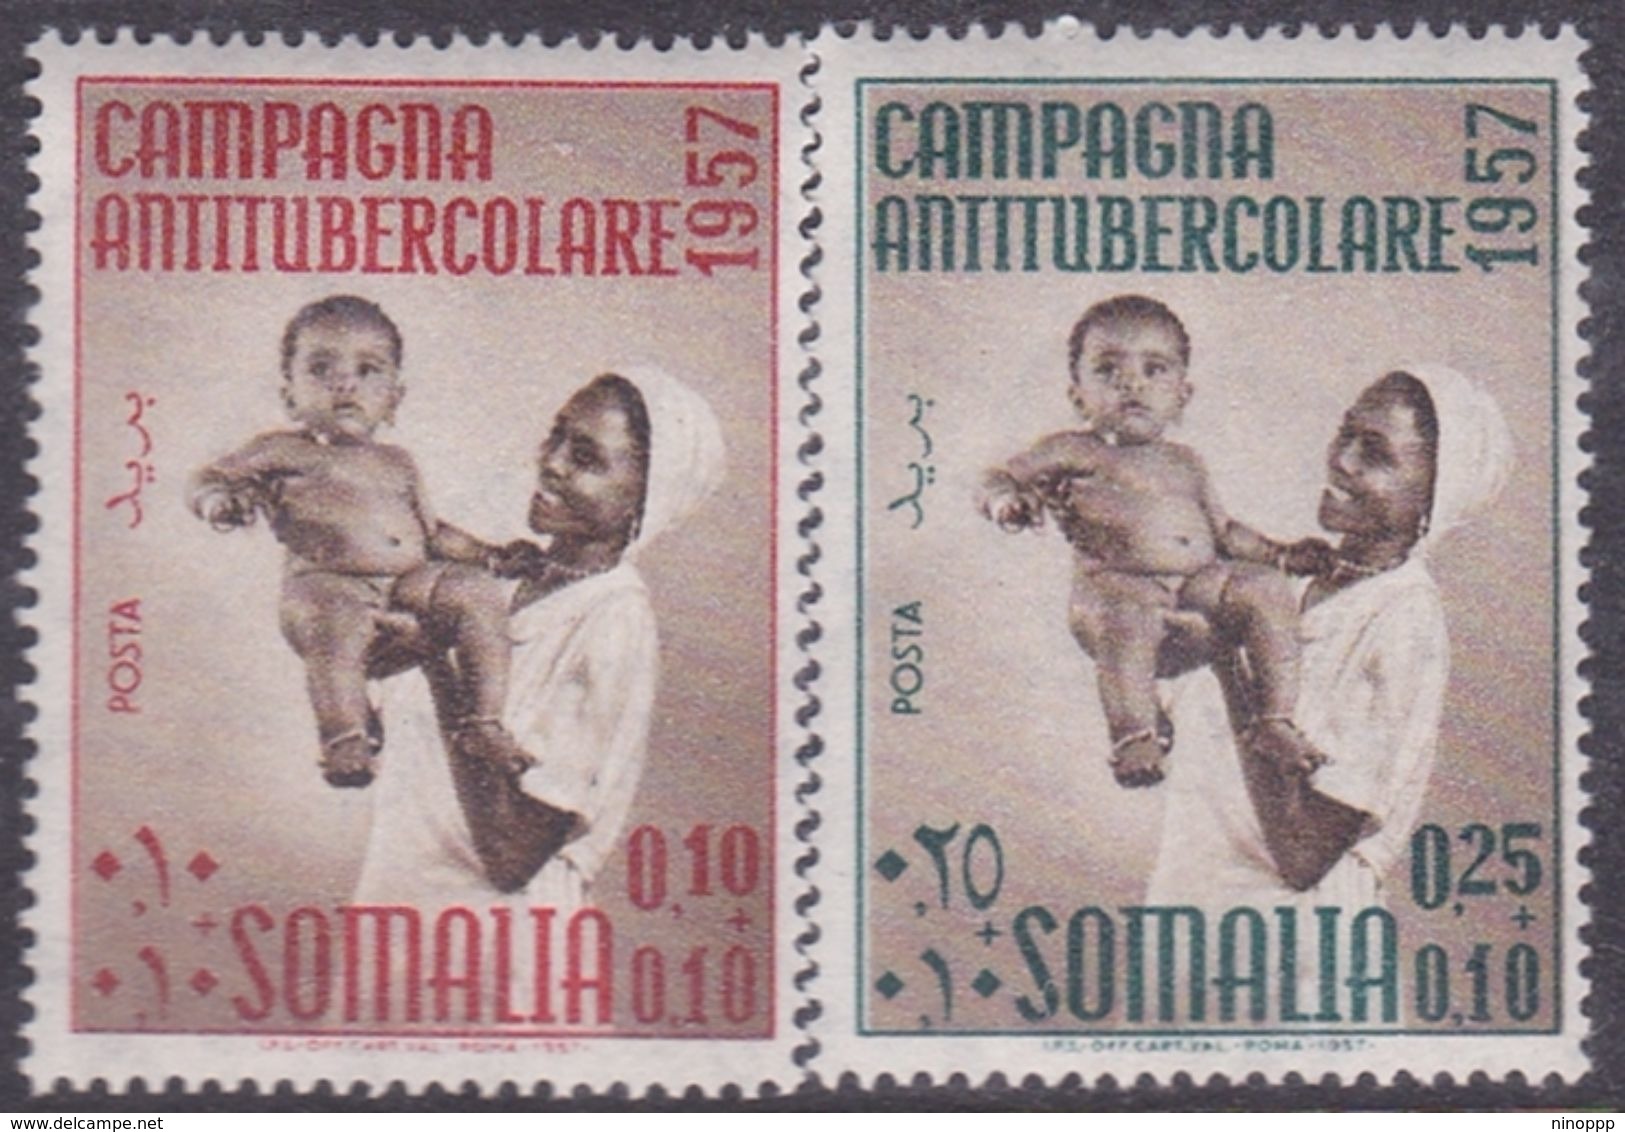 Somalia Scott B52-53 1957 2nd Campaign Against Tuberculosis, Mint Never Hinged - Somalie (AFIS)